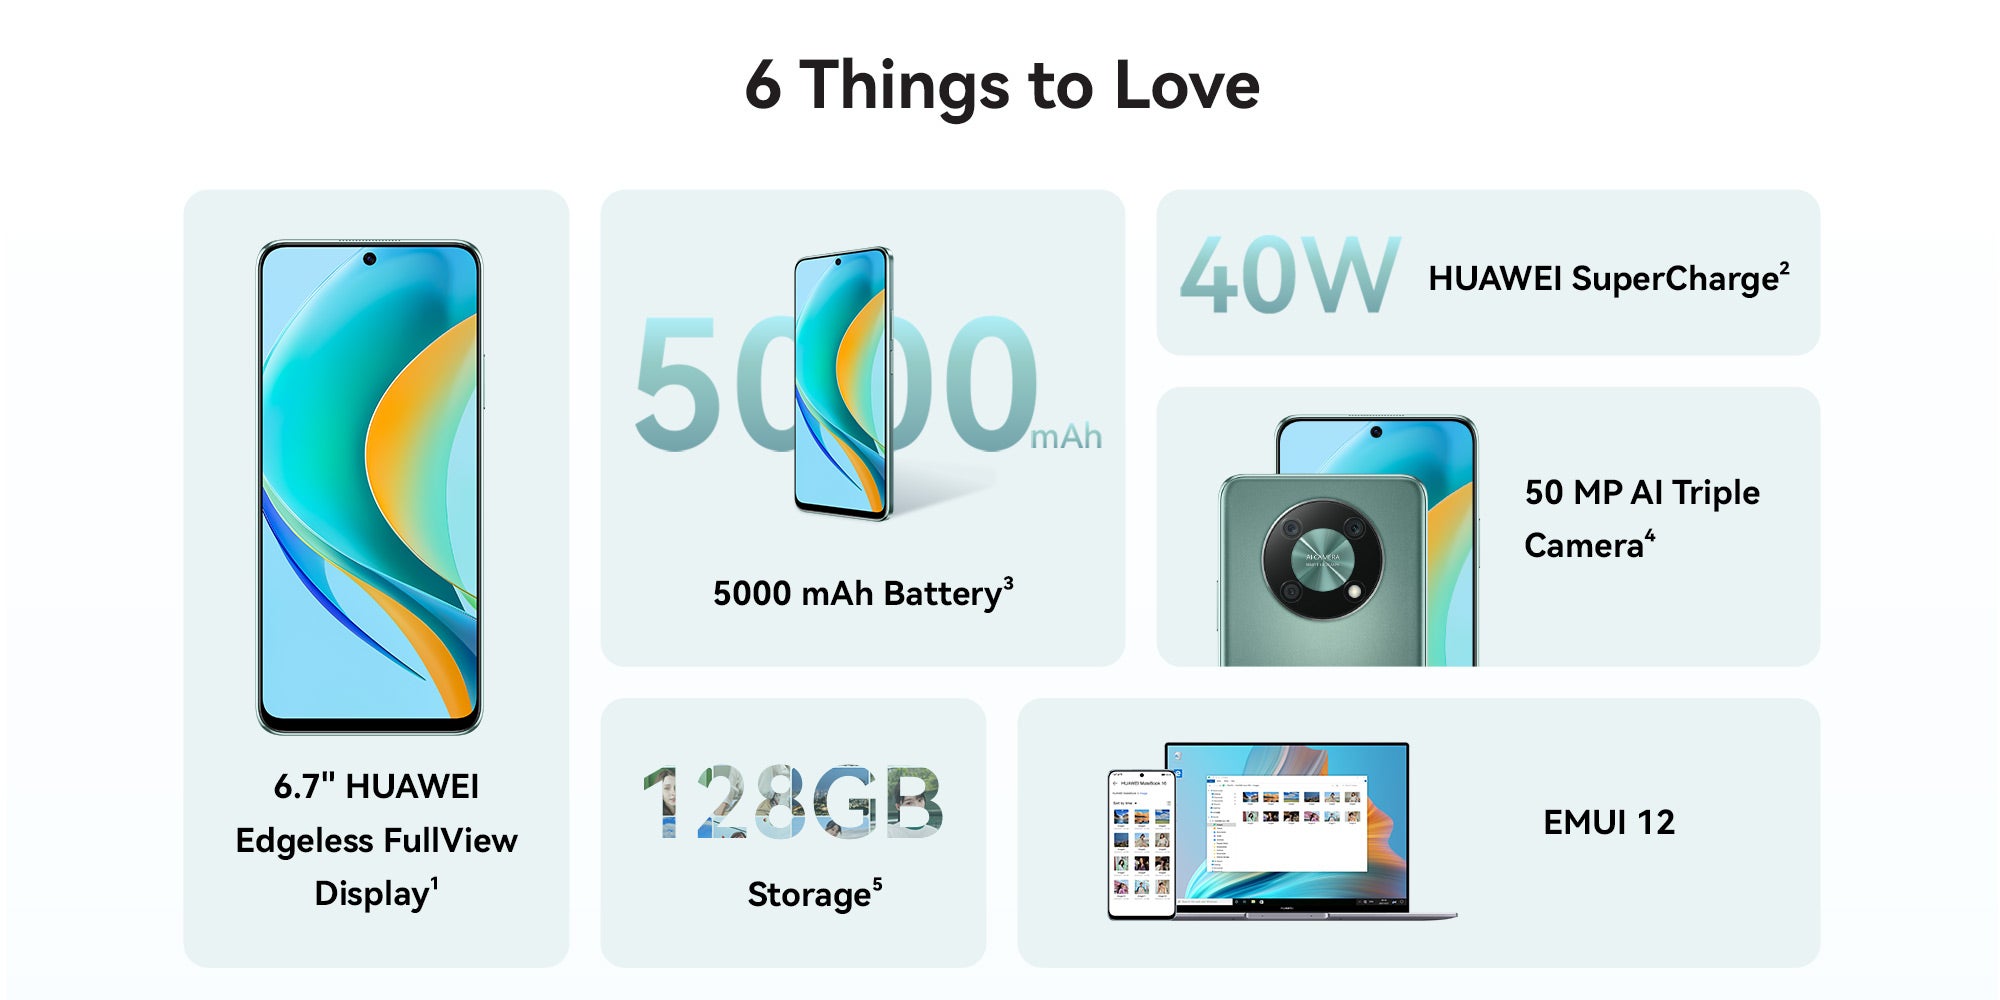 Huawei Nova Y90 | Dual SIM 6GB RAM 128GB 4G | PLUGnPOINT